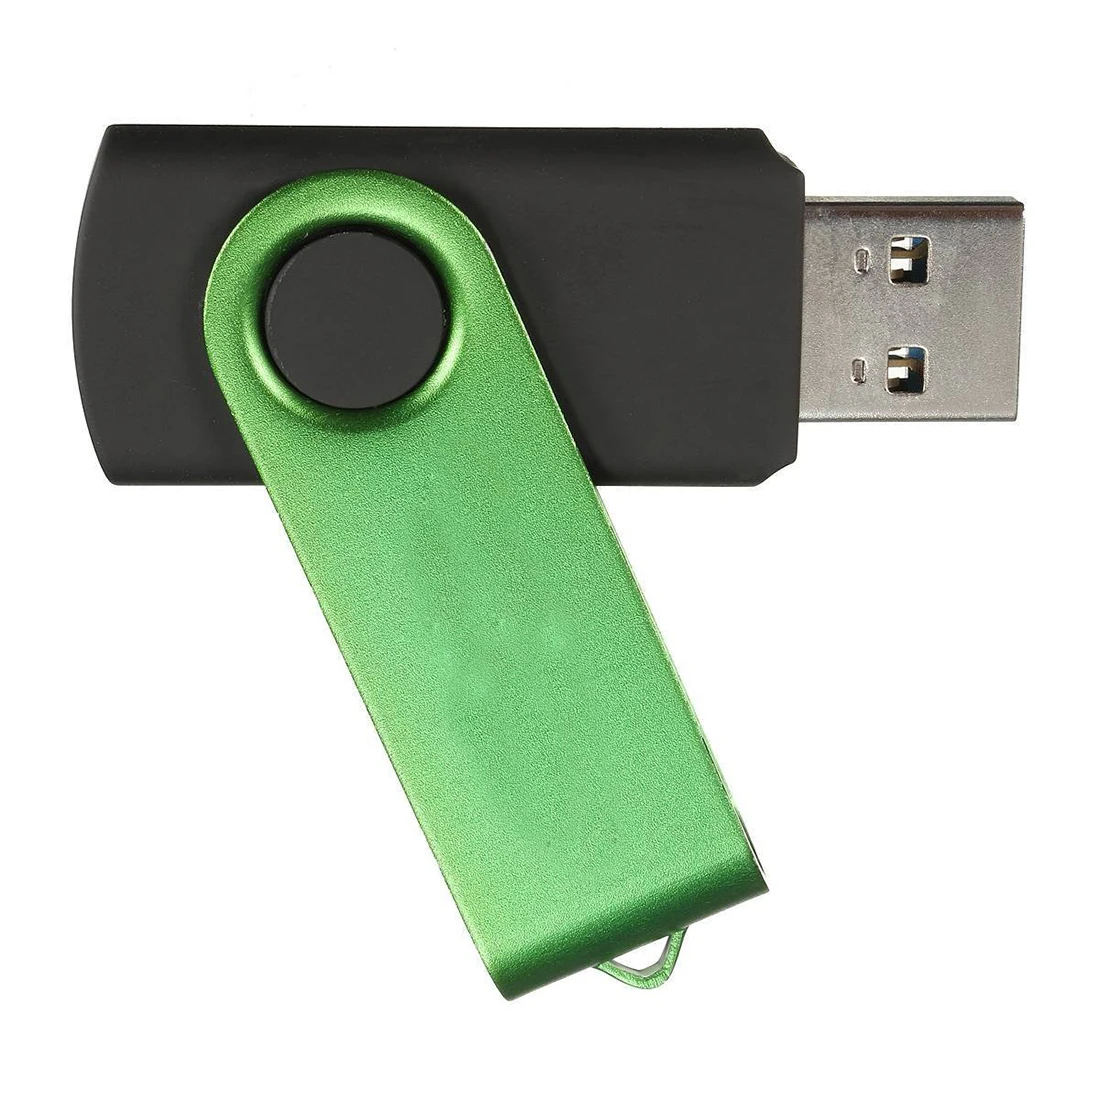 USB карта памяти 3 0 64 Гб флэш-накопитель вращающийся дата-накопитель подарок -